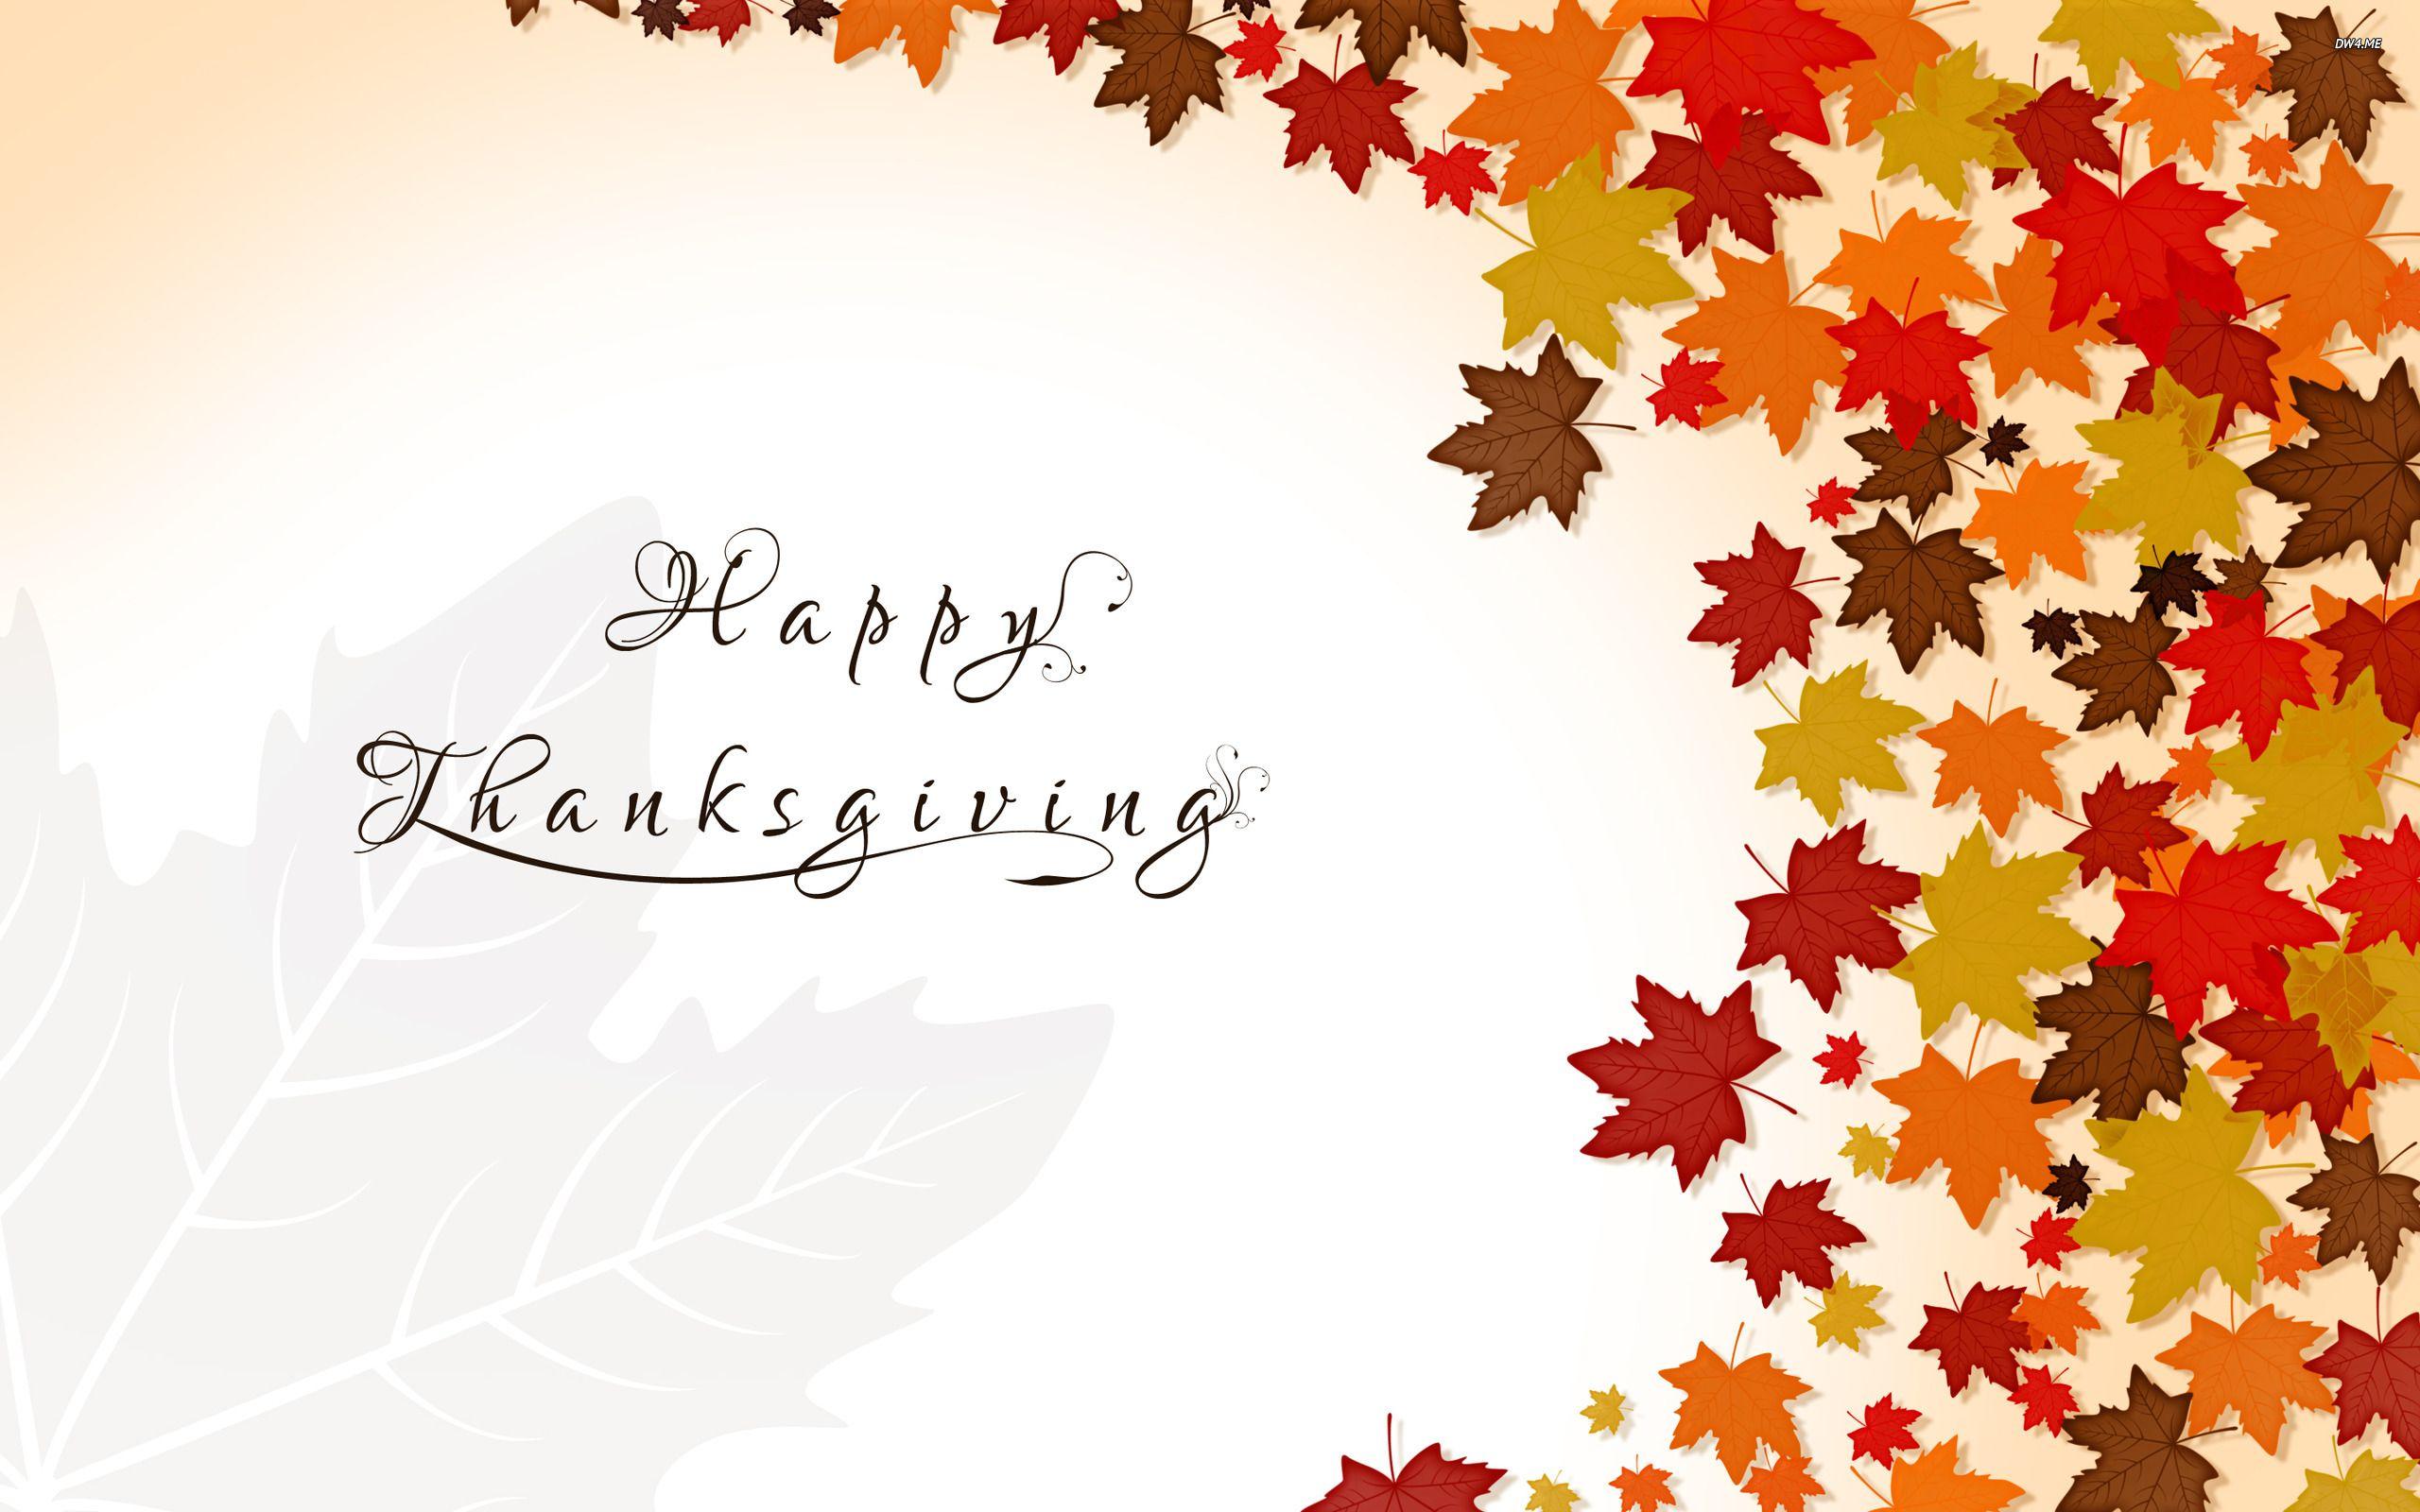 Beautifull Thanksgiving Wallpaper Free Download. Wallpaper